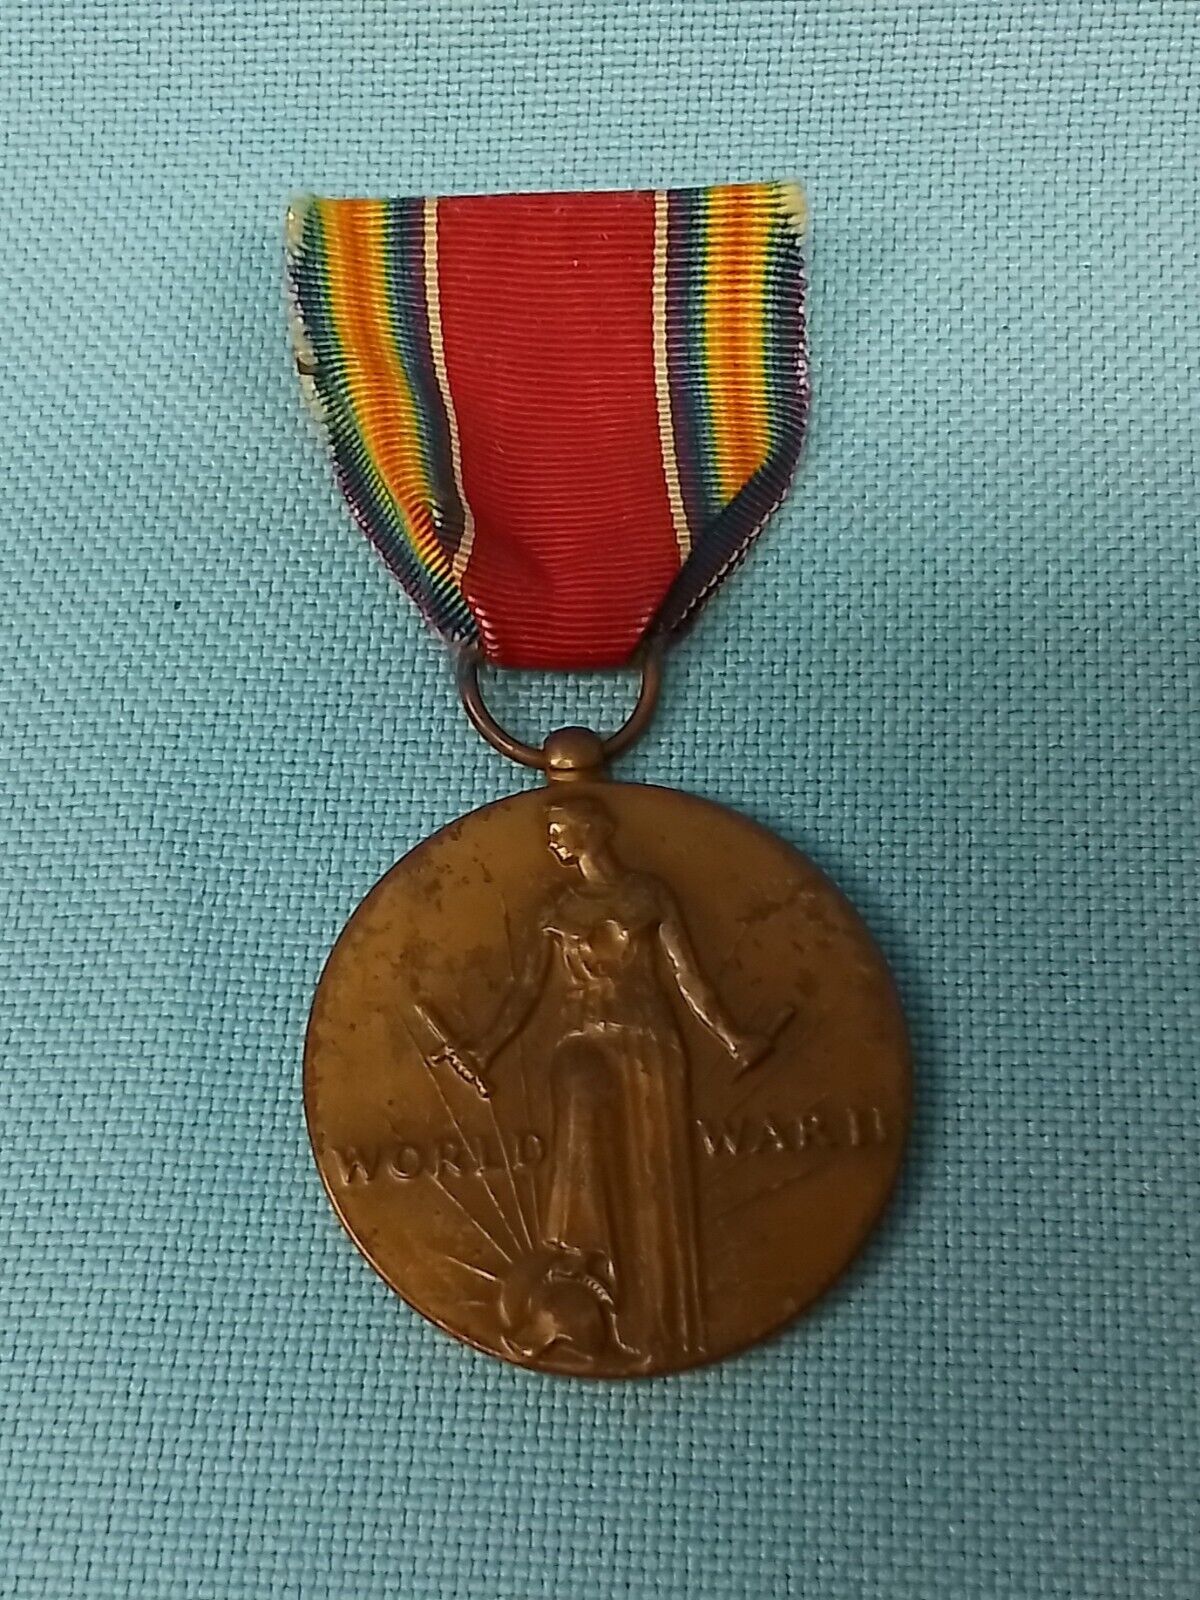 Worid War II Freedom Medal With Original Ribbon